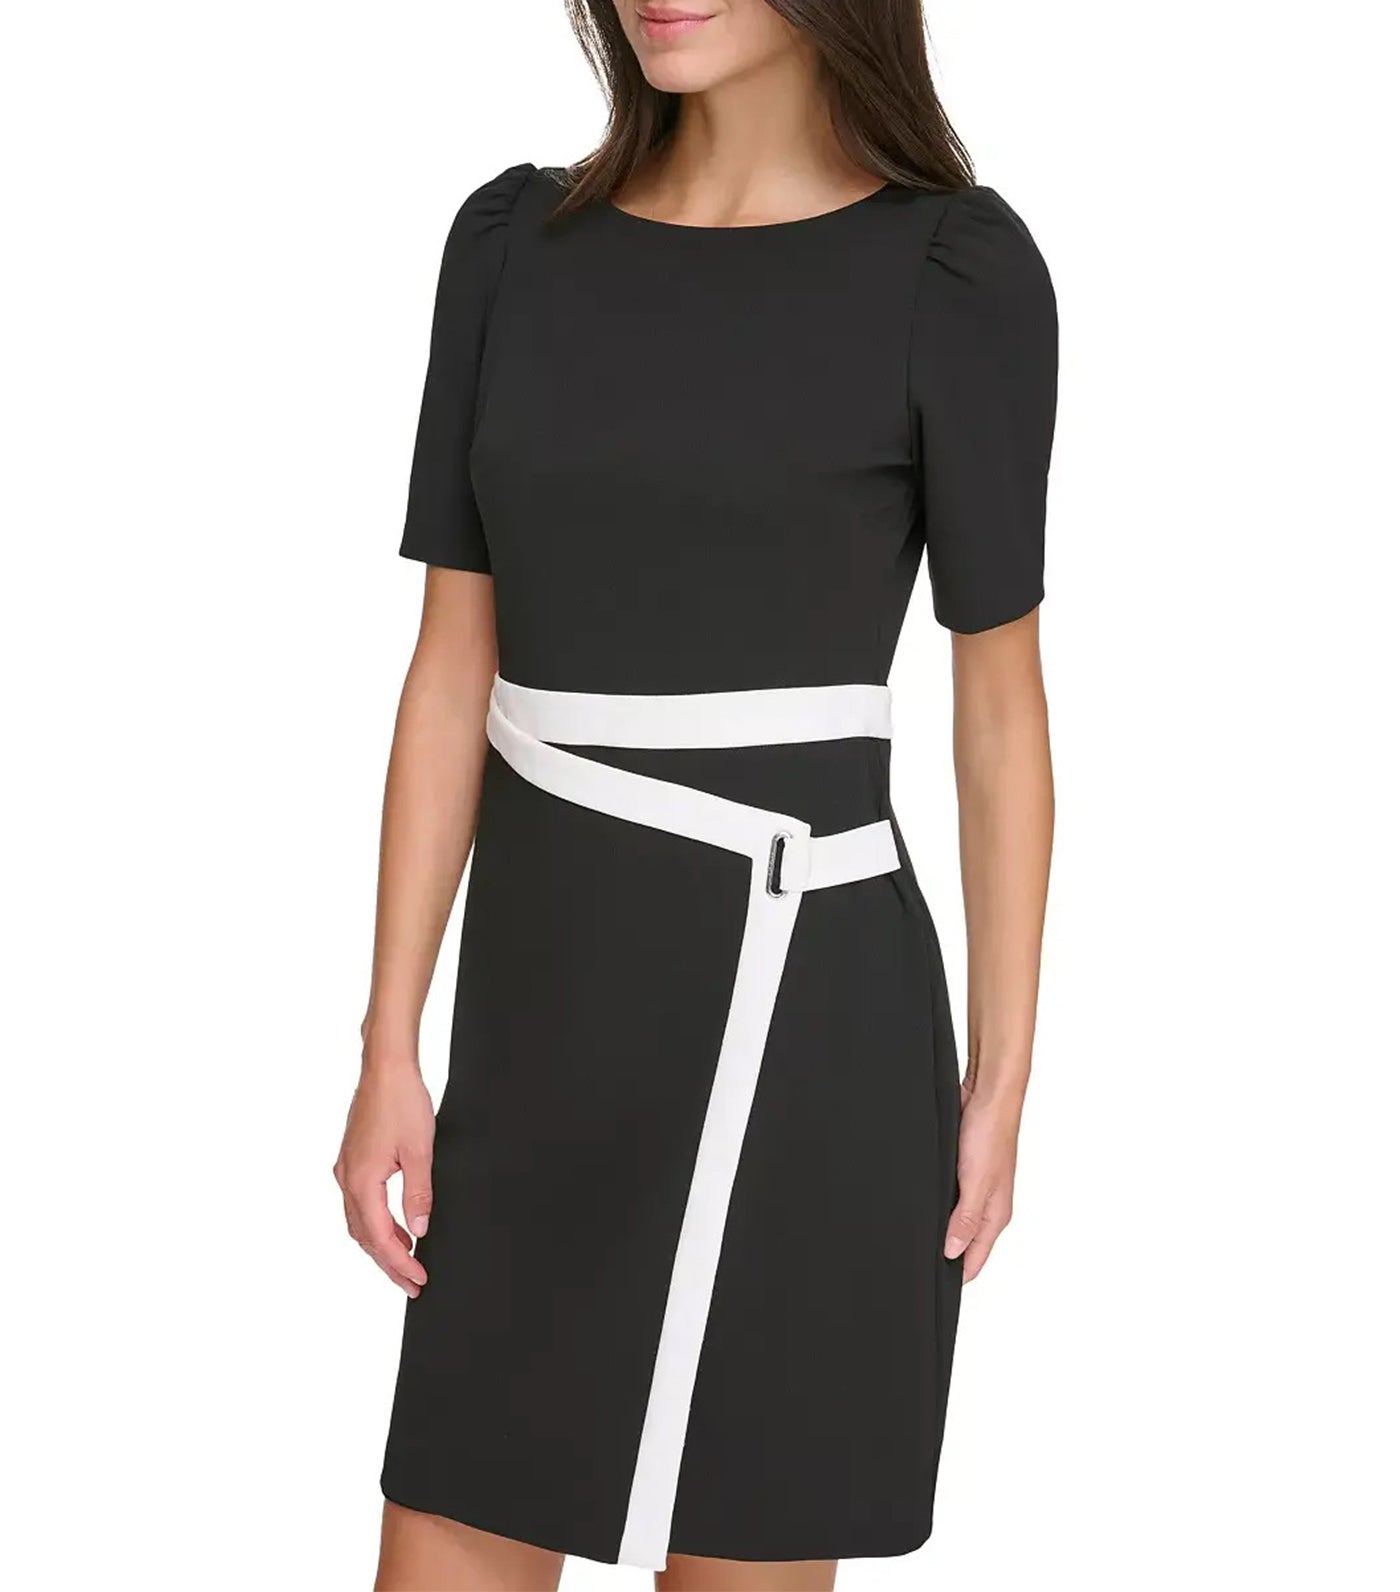 Puff Sleeve Dress with Envelope Skirt Black/Ivory